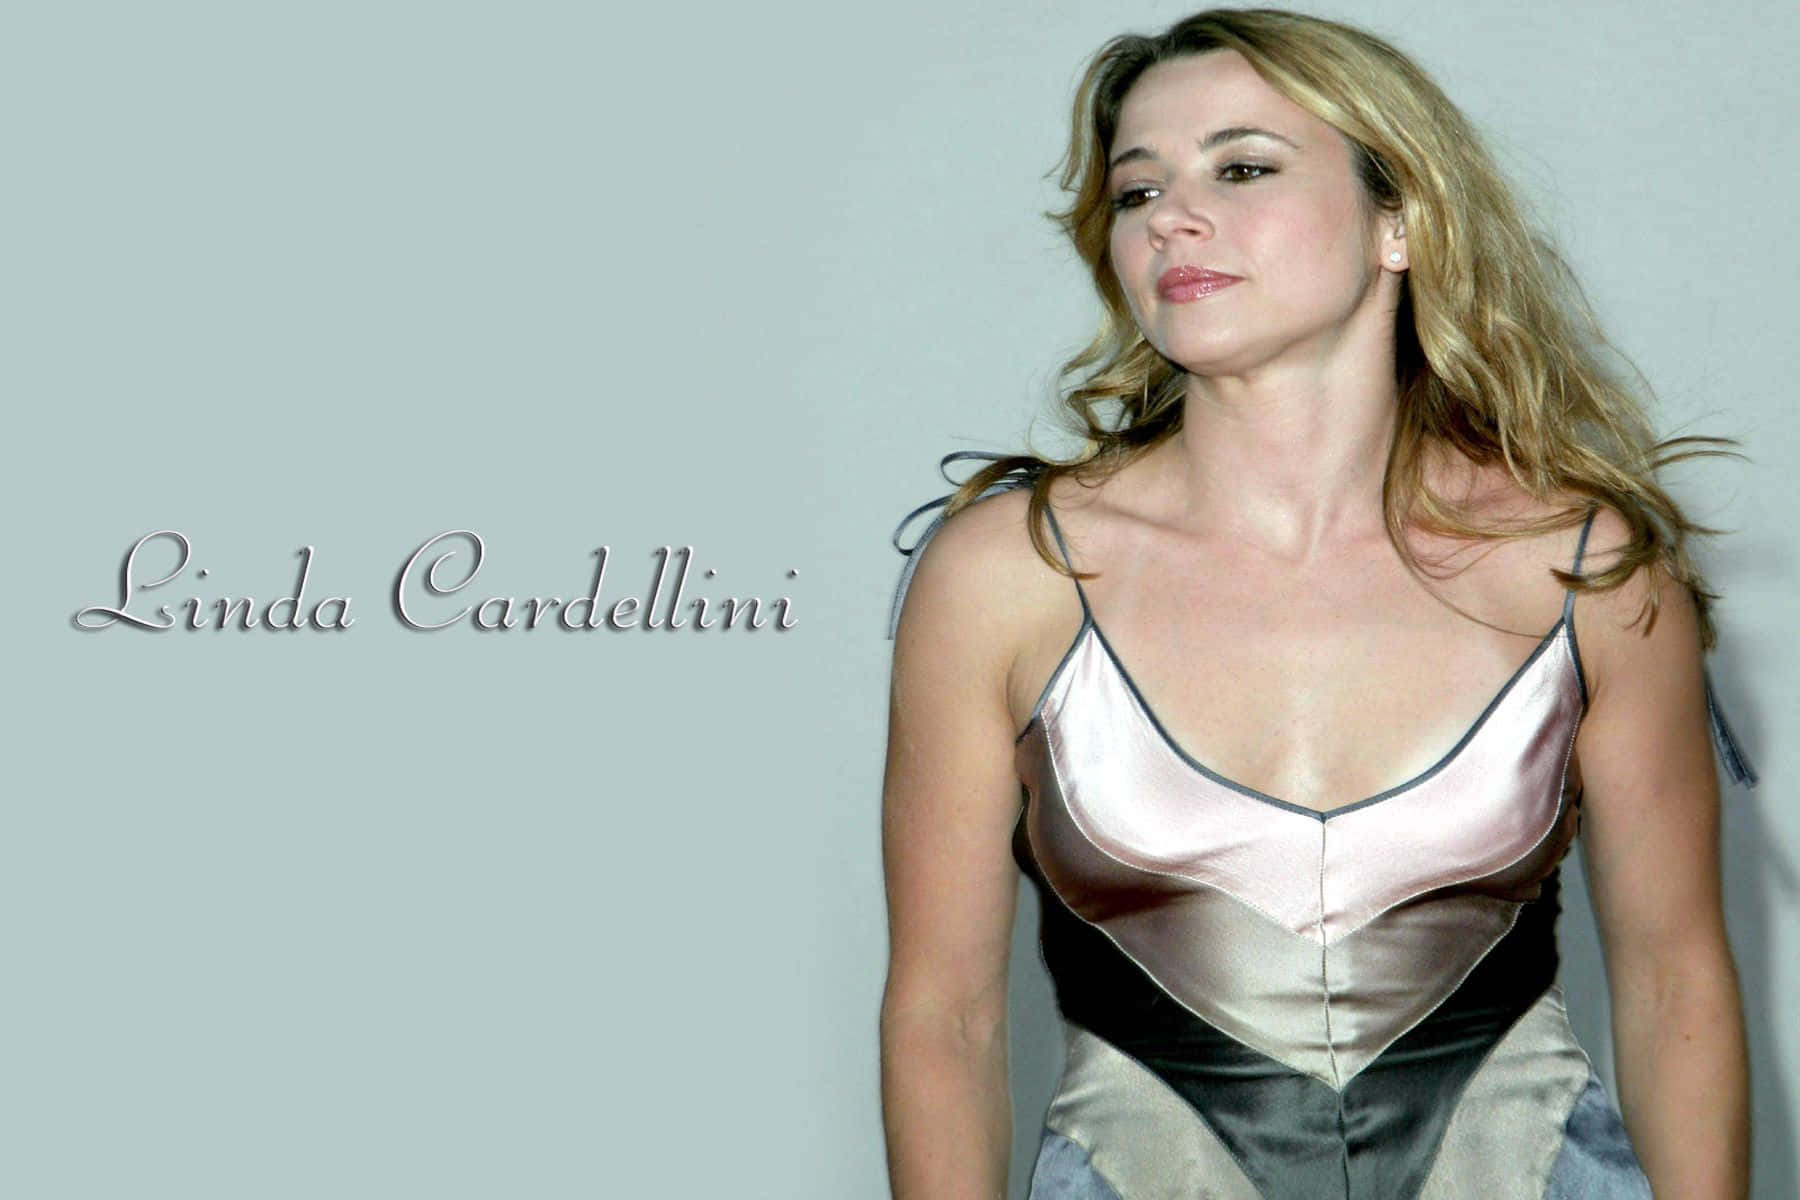 Elegant Linda Cardellini posing at a photoshoot Wallpaper